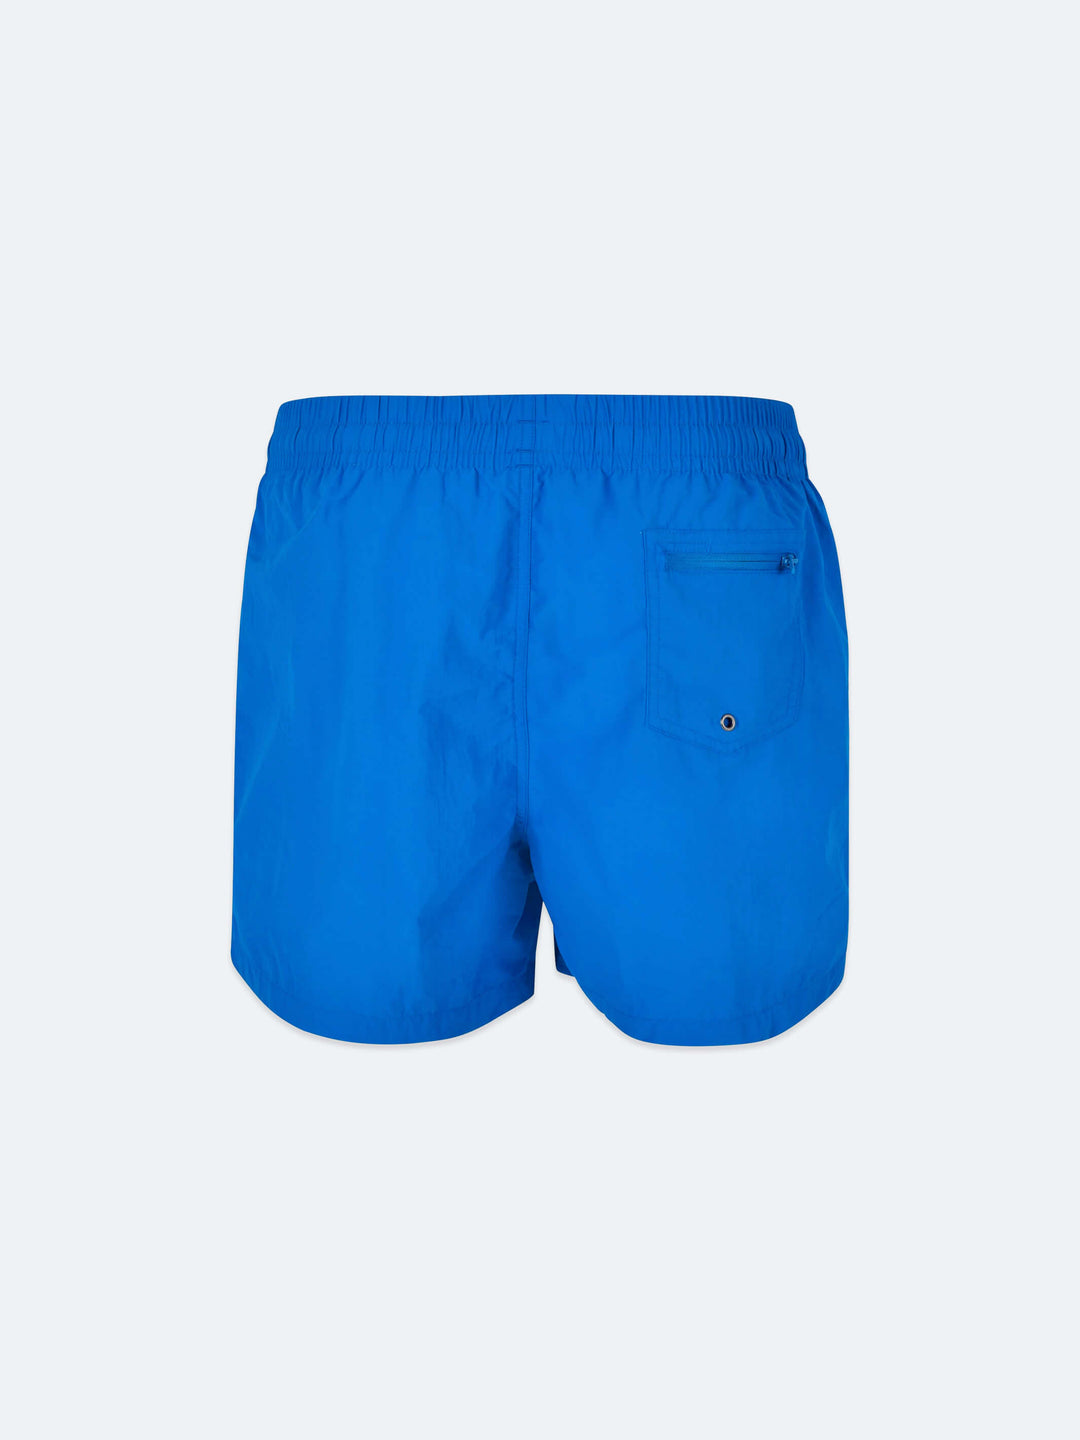 Boxed Swim Shorts (Cobalt Blue)